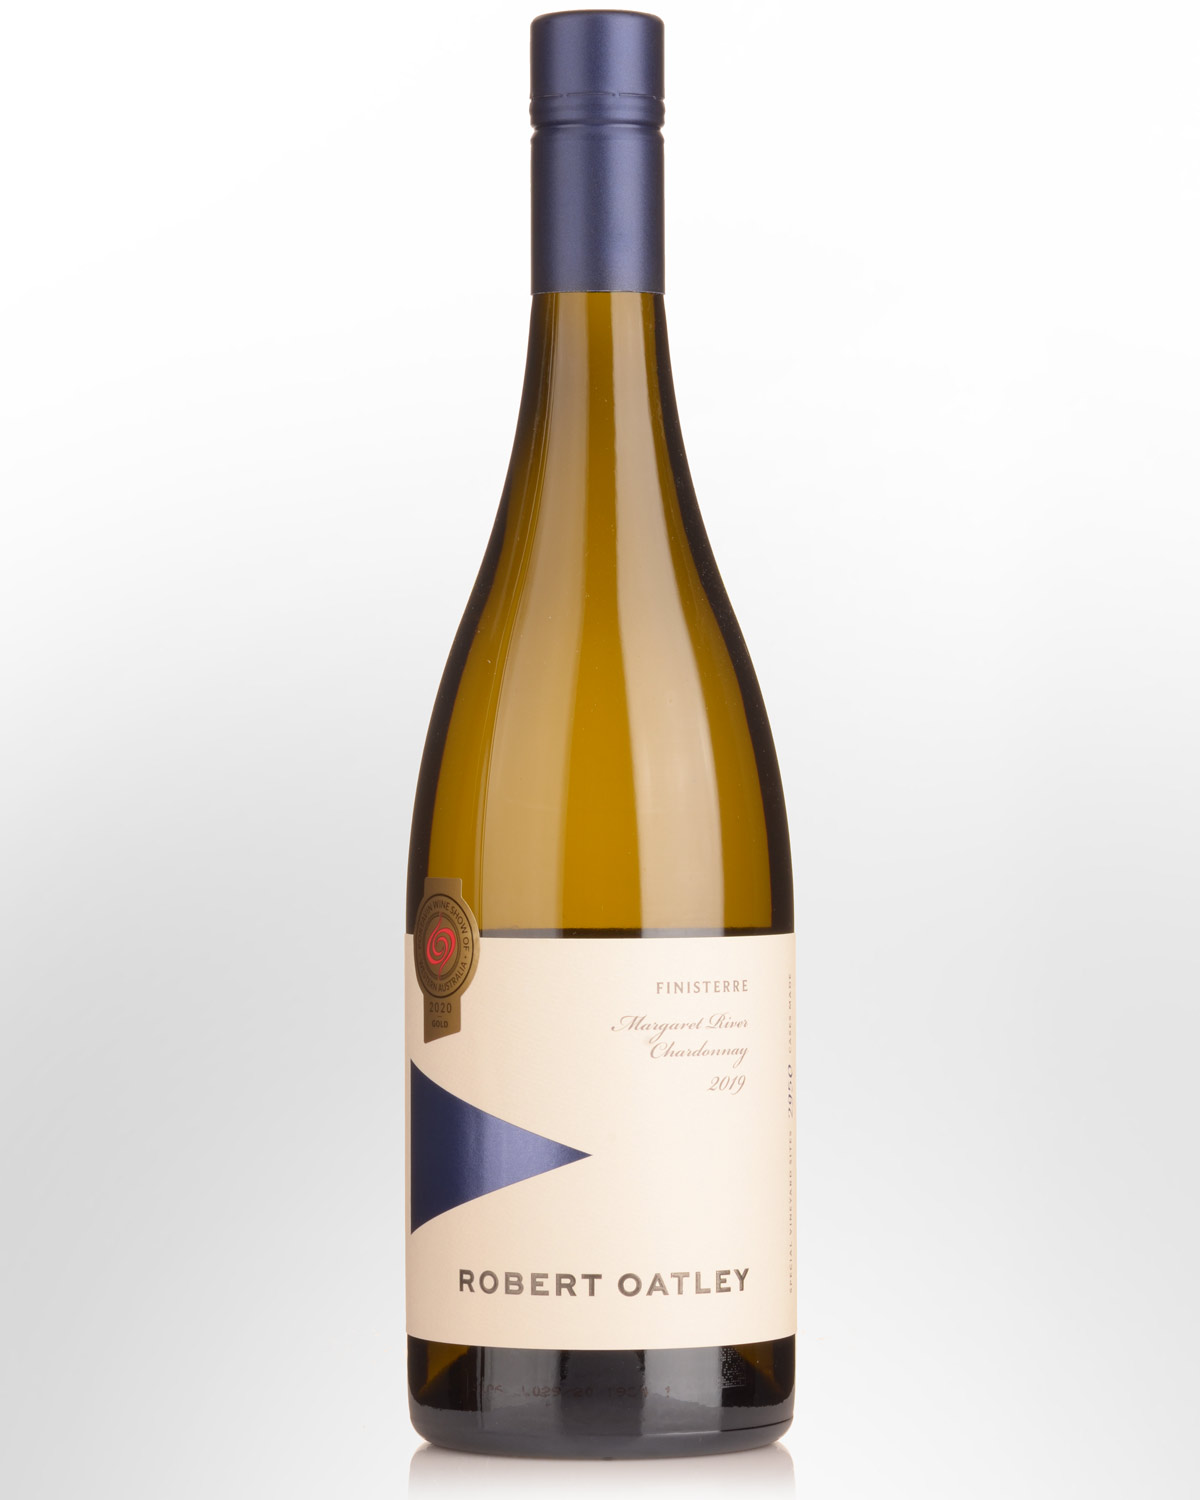 Robert Oatley-finisterre Chardonnay